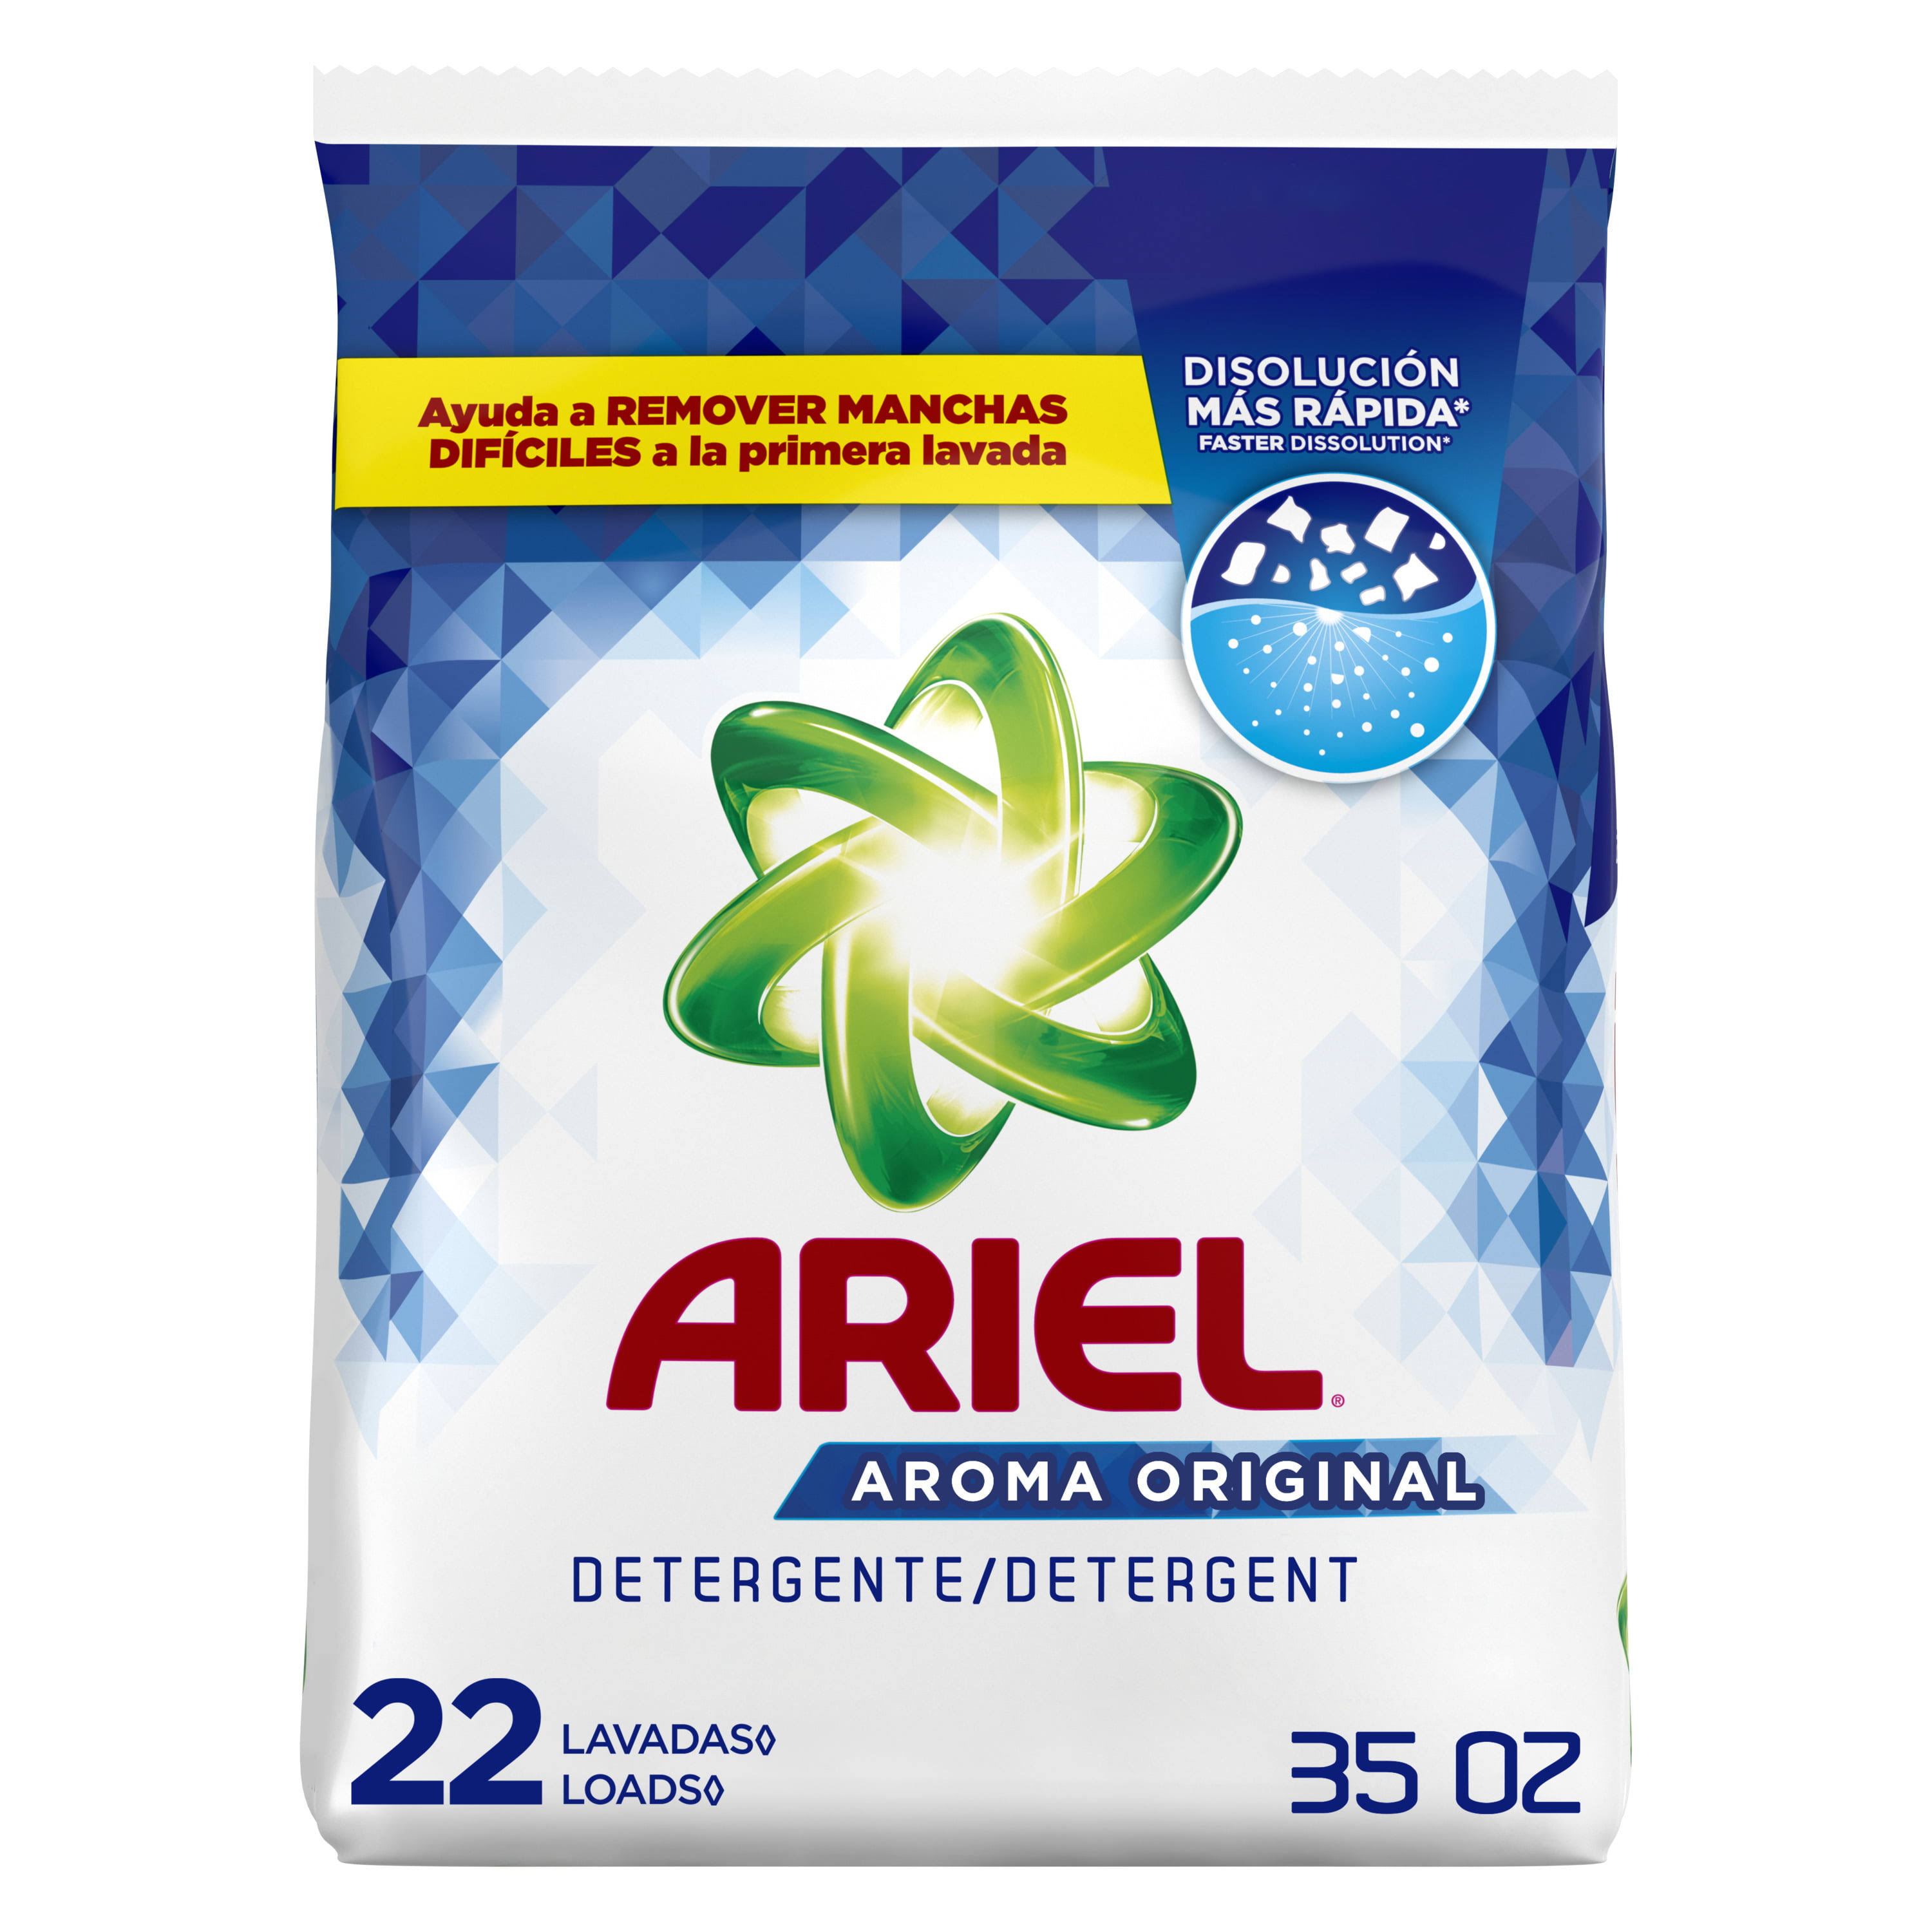 Ariel Aroma Original Detergent - 35oz